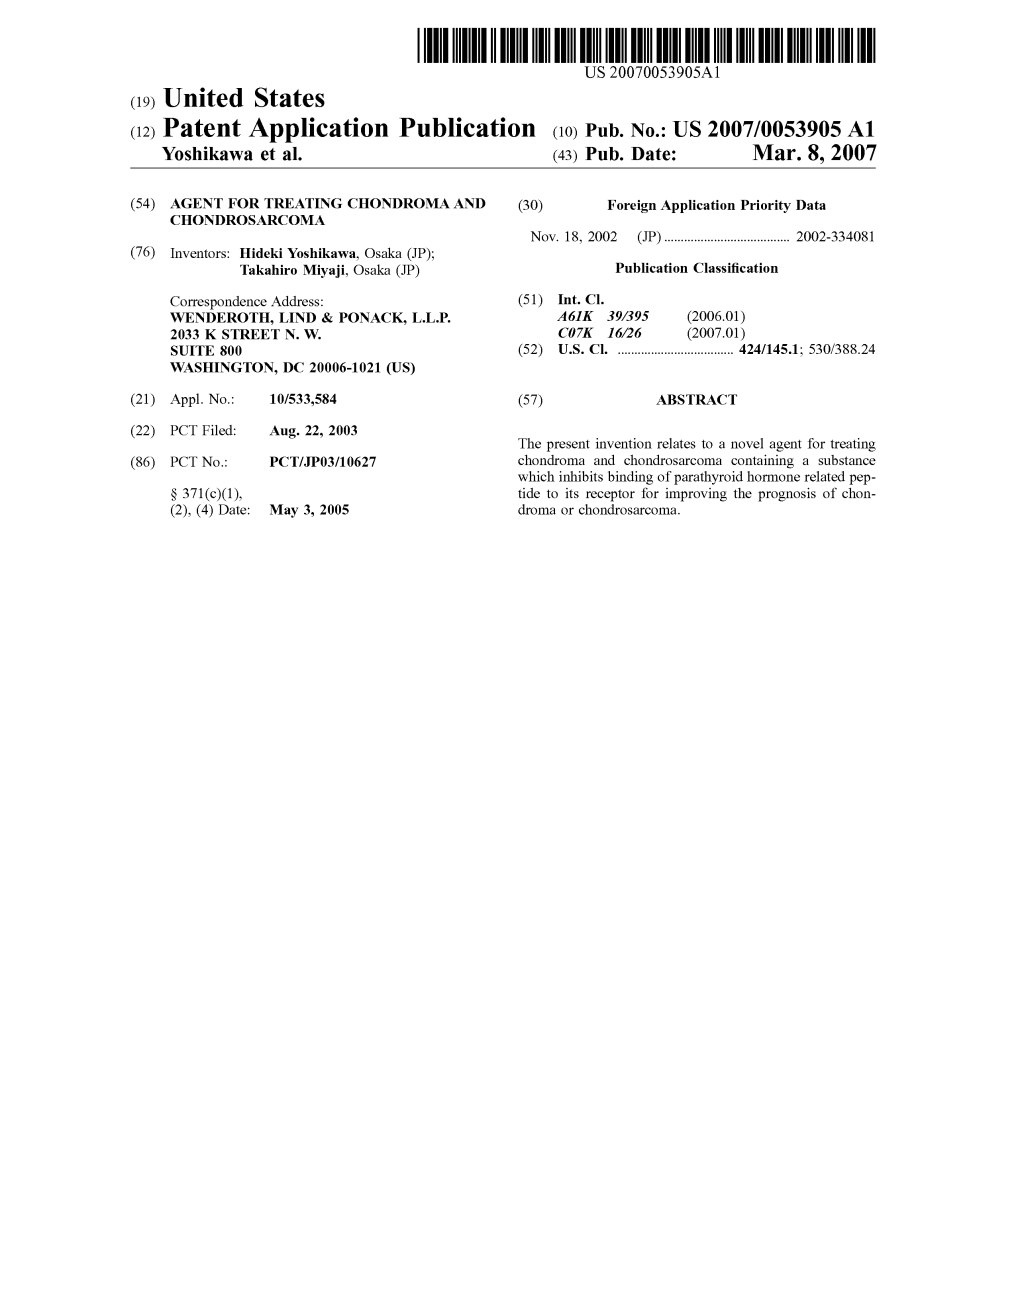 (12) Patent Application Publication (10) Pub. No.: US 2007/0053905 A1 Yoshikawa Et Al